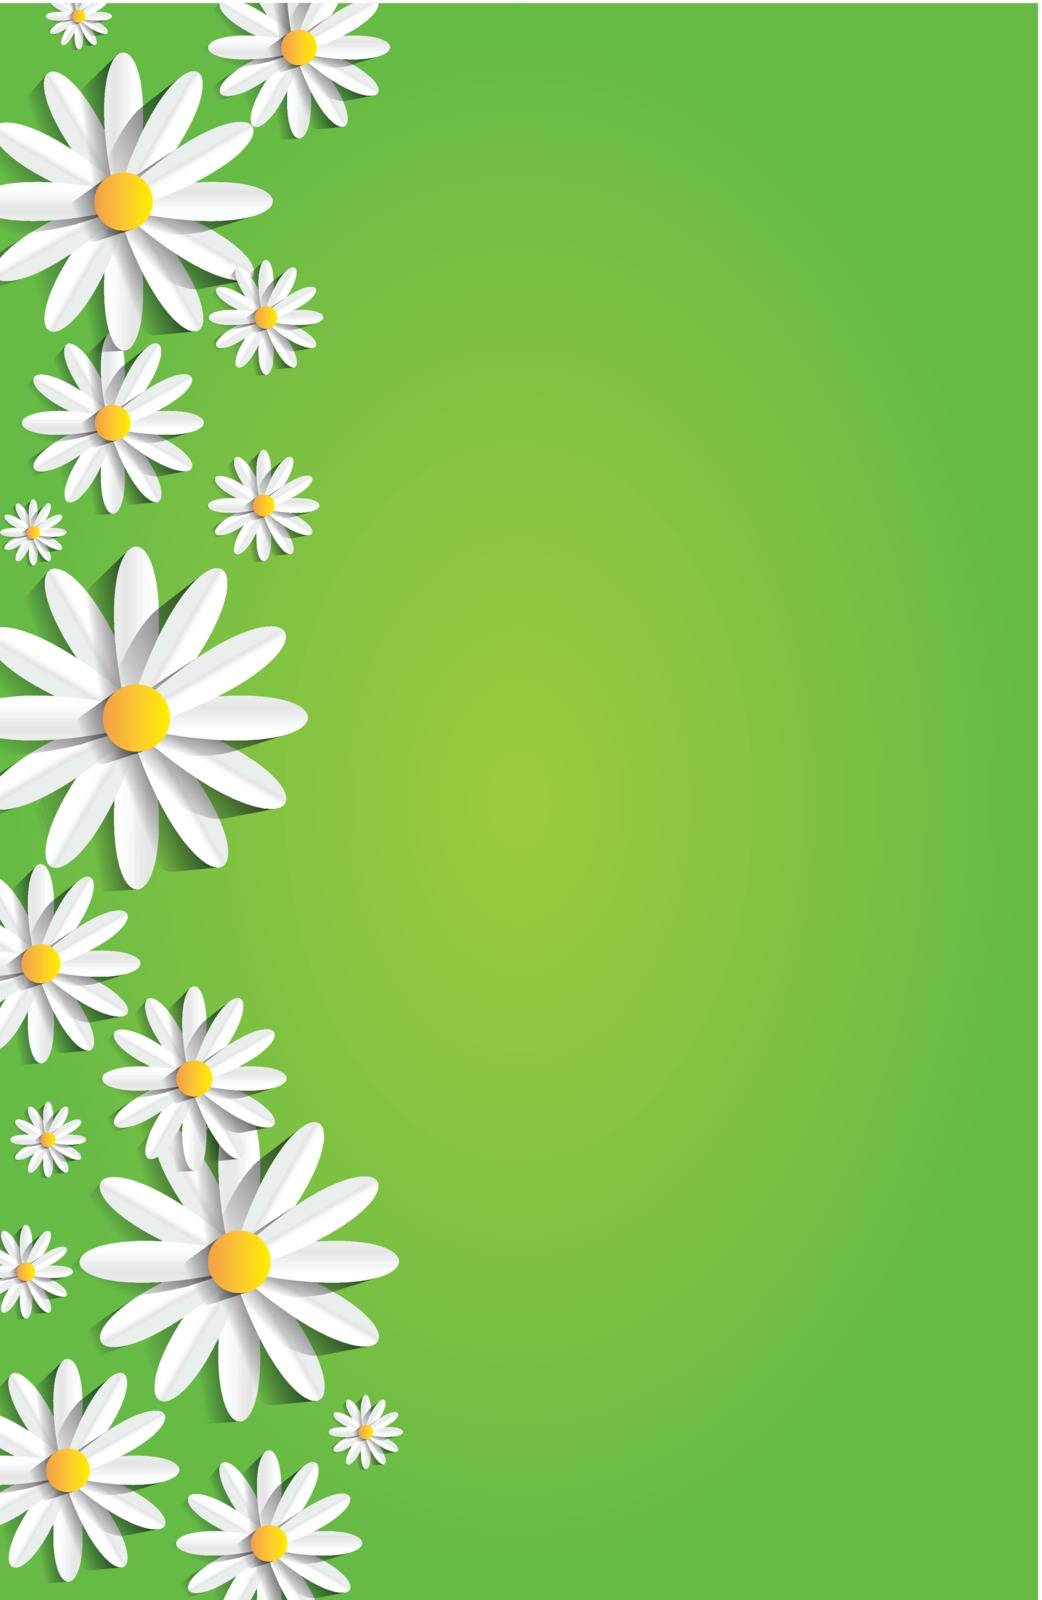 Spring Flowers On Green Background vector illustration